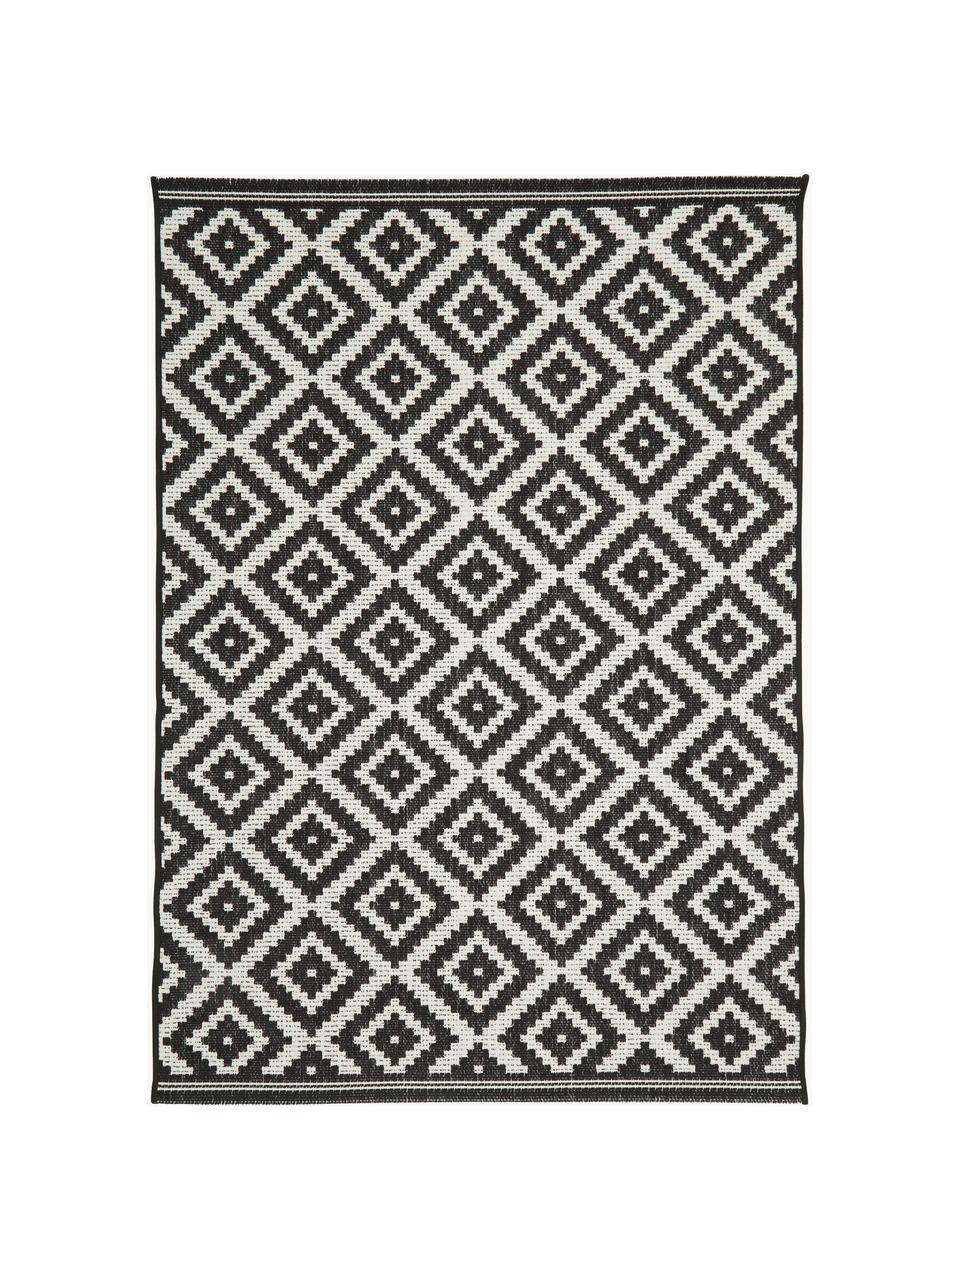 Interiérový/exteriérový koberec Miami, 70 % polypropylen, 30 % polyester, Černá, bílá, Š 80 cm, D 150 cm (velikost XS)